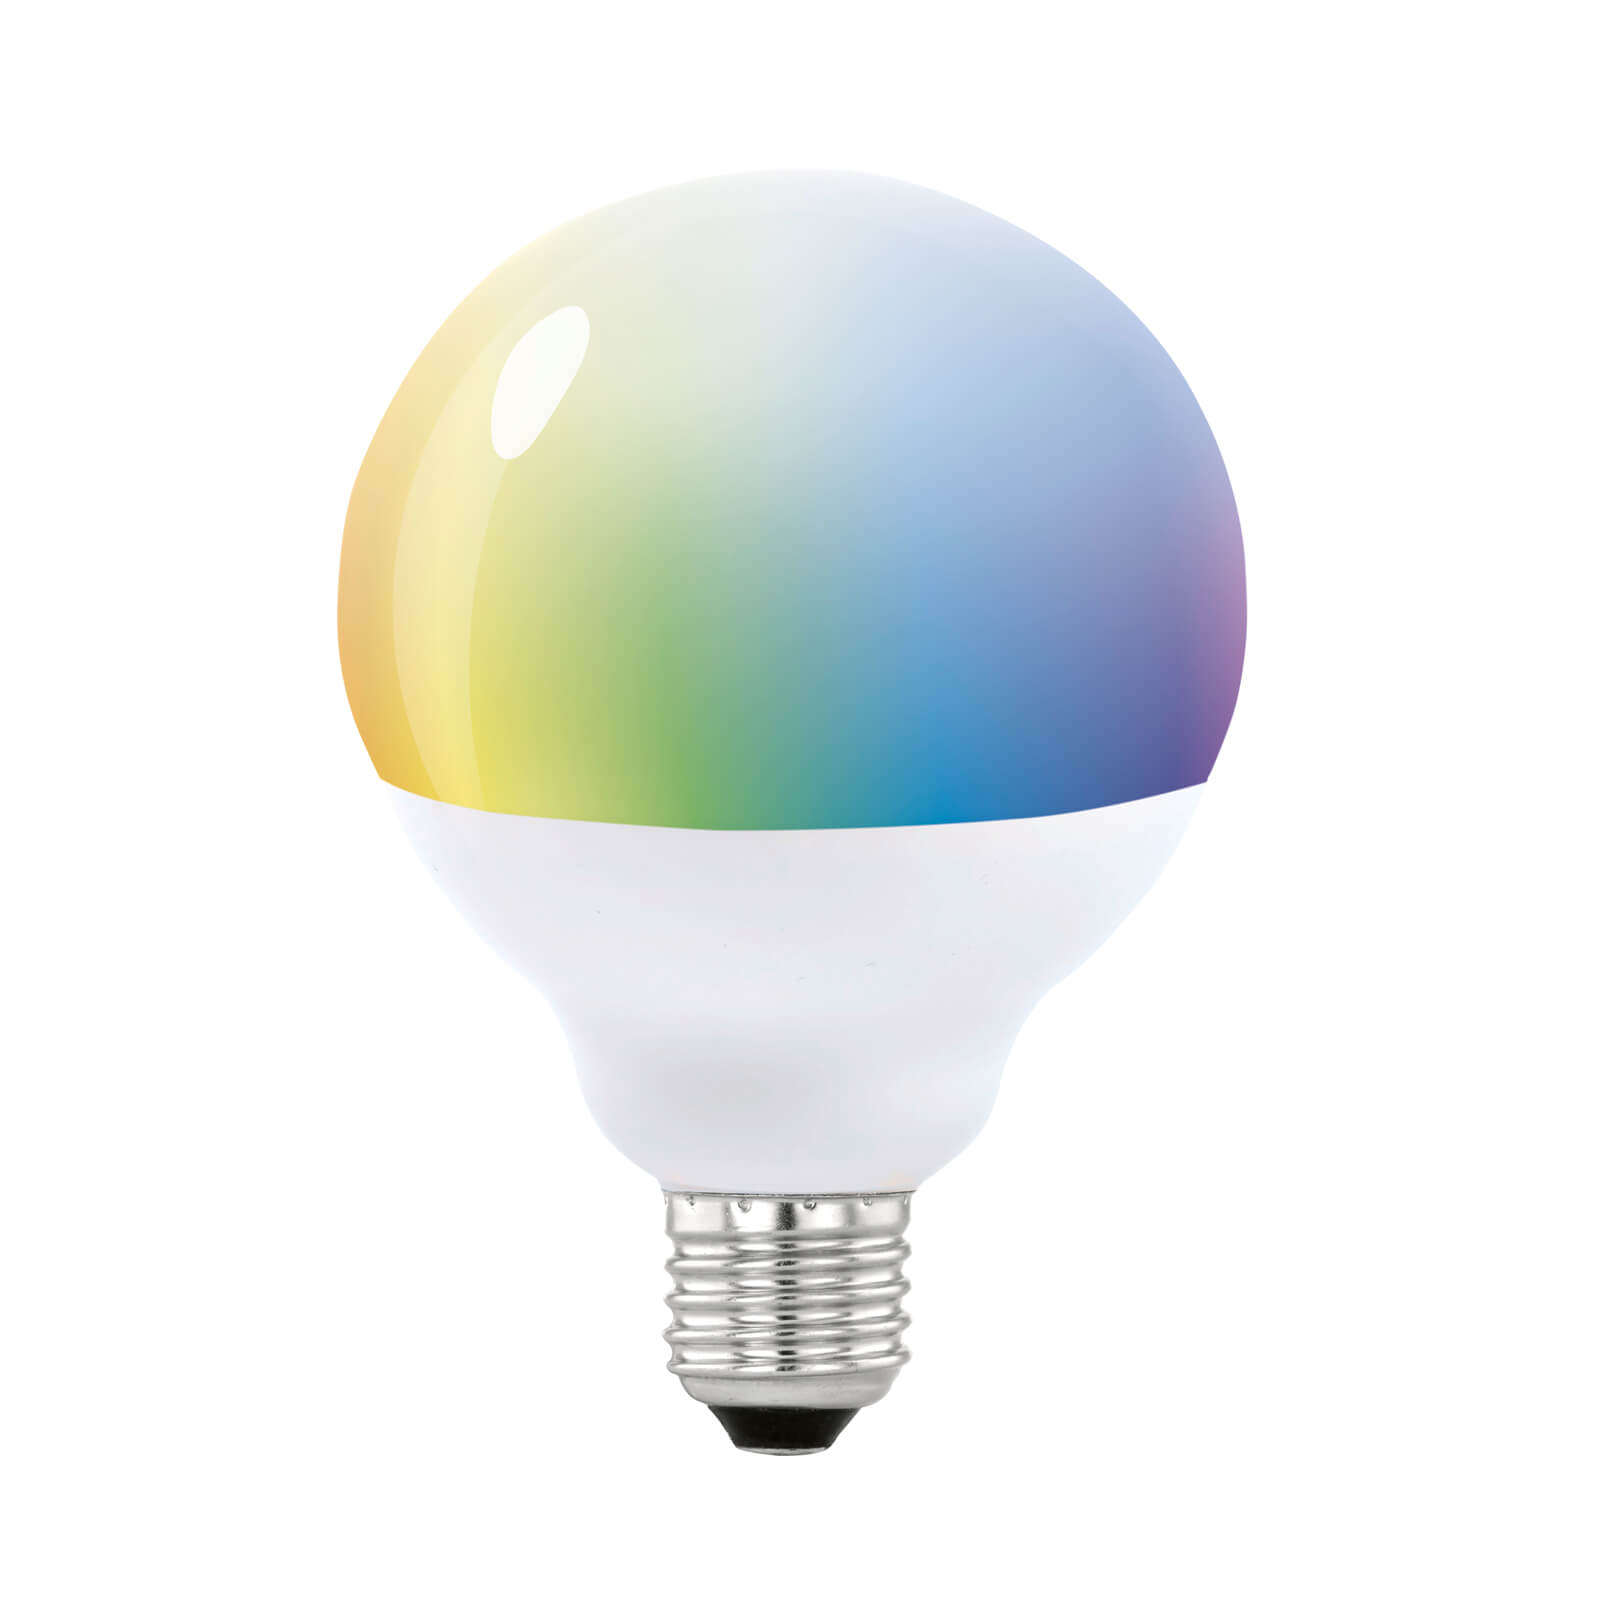 Eglo Connect LED Lamp 13W E27, White and Color